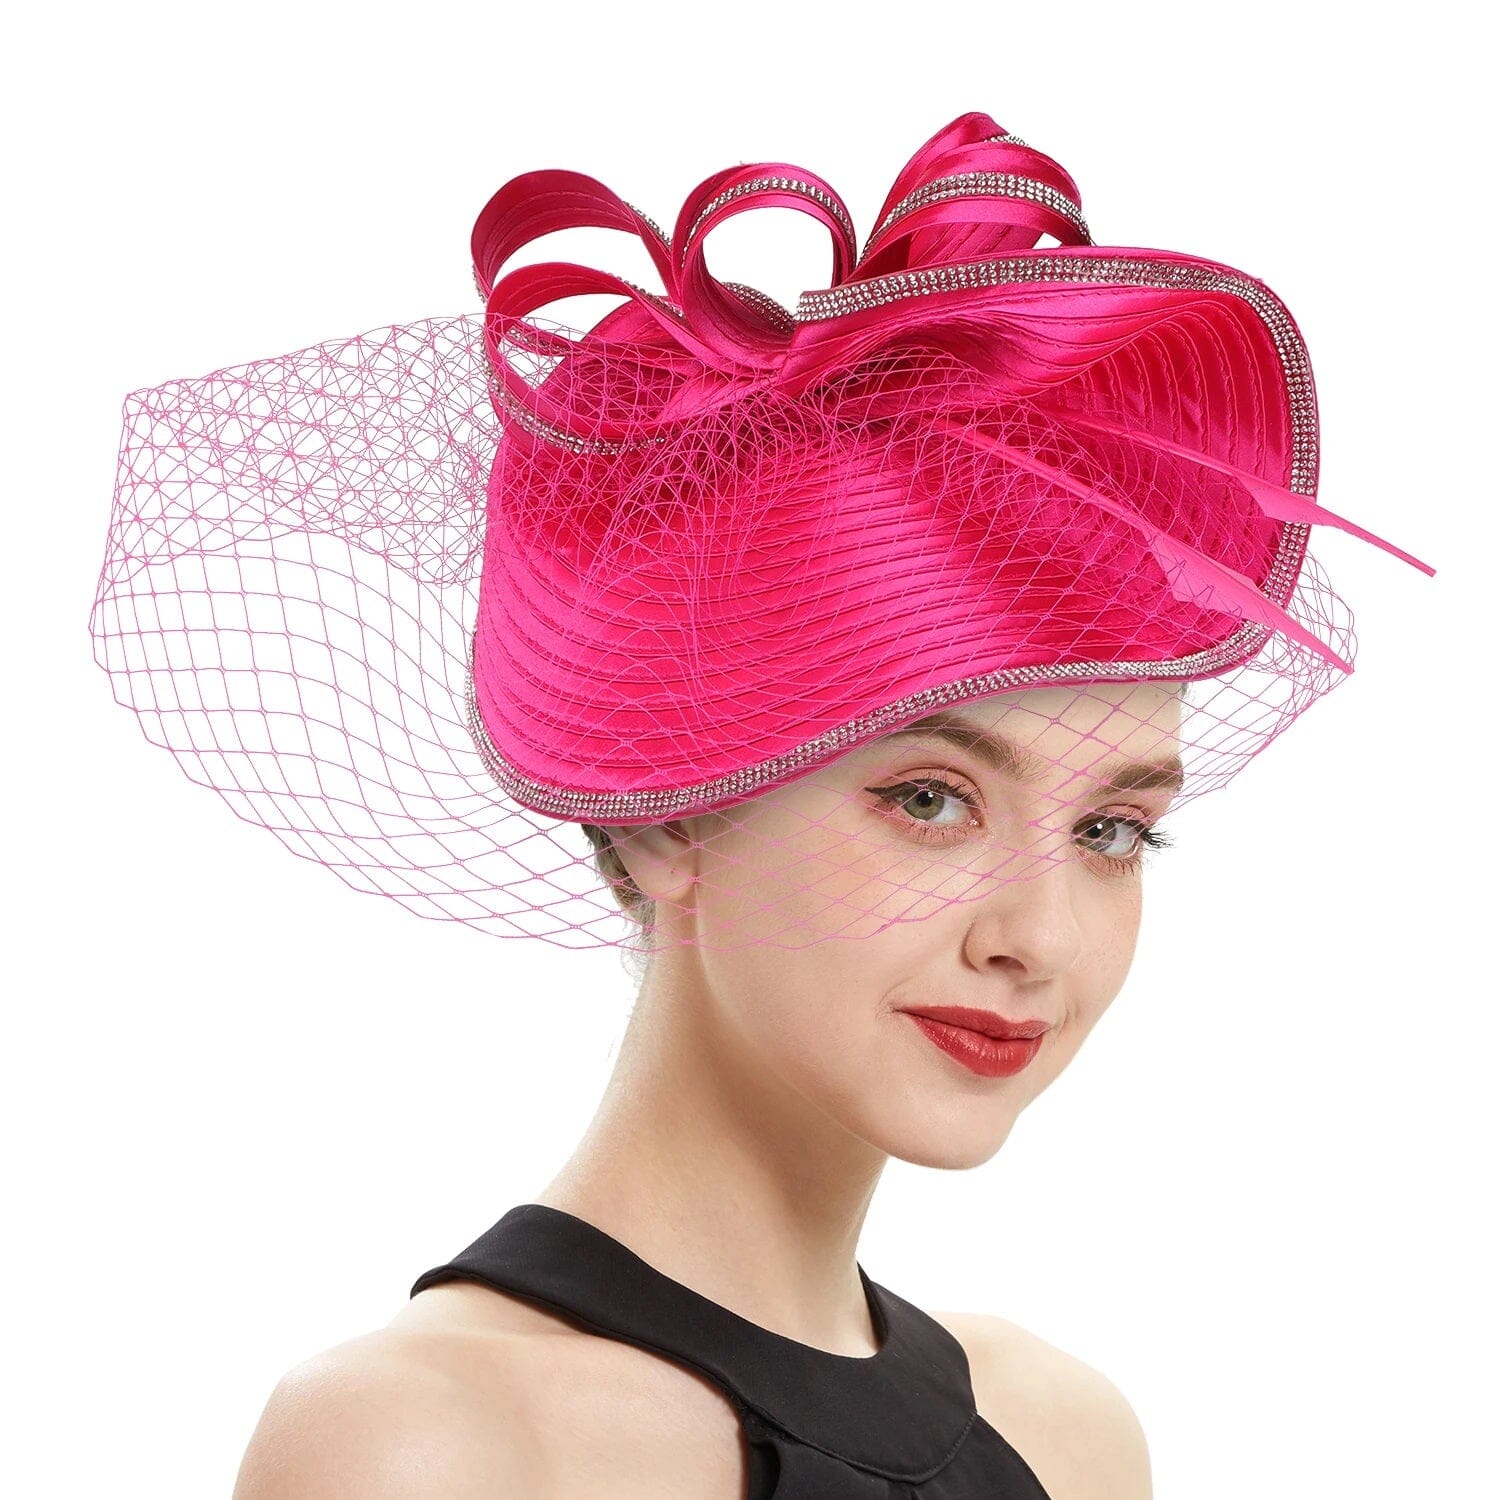 Women Diamond-studded Luxurious Banquet Wedding Dance Party Feather Headwear Fascinator Veil Hat Hat jehouze 5-hotpink 